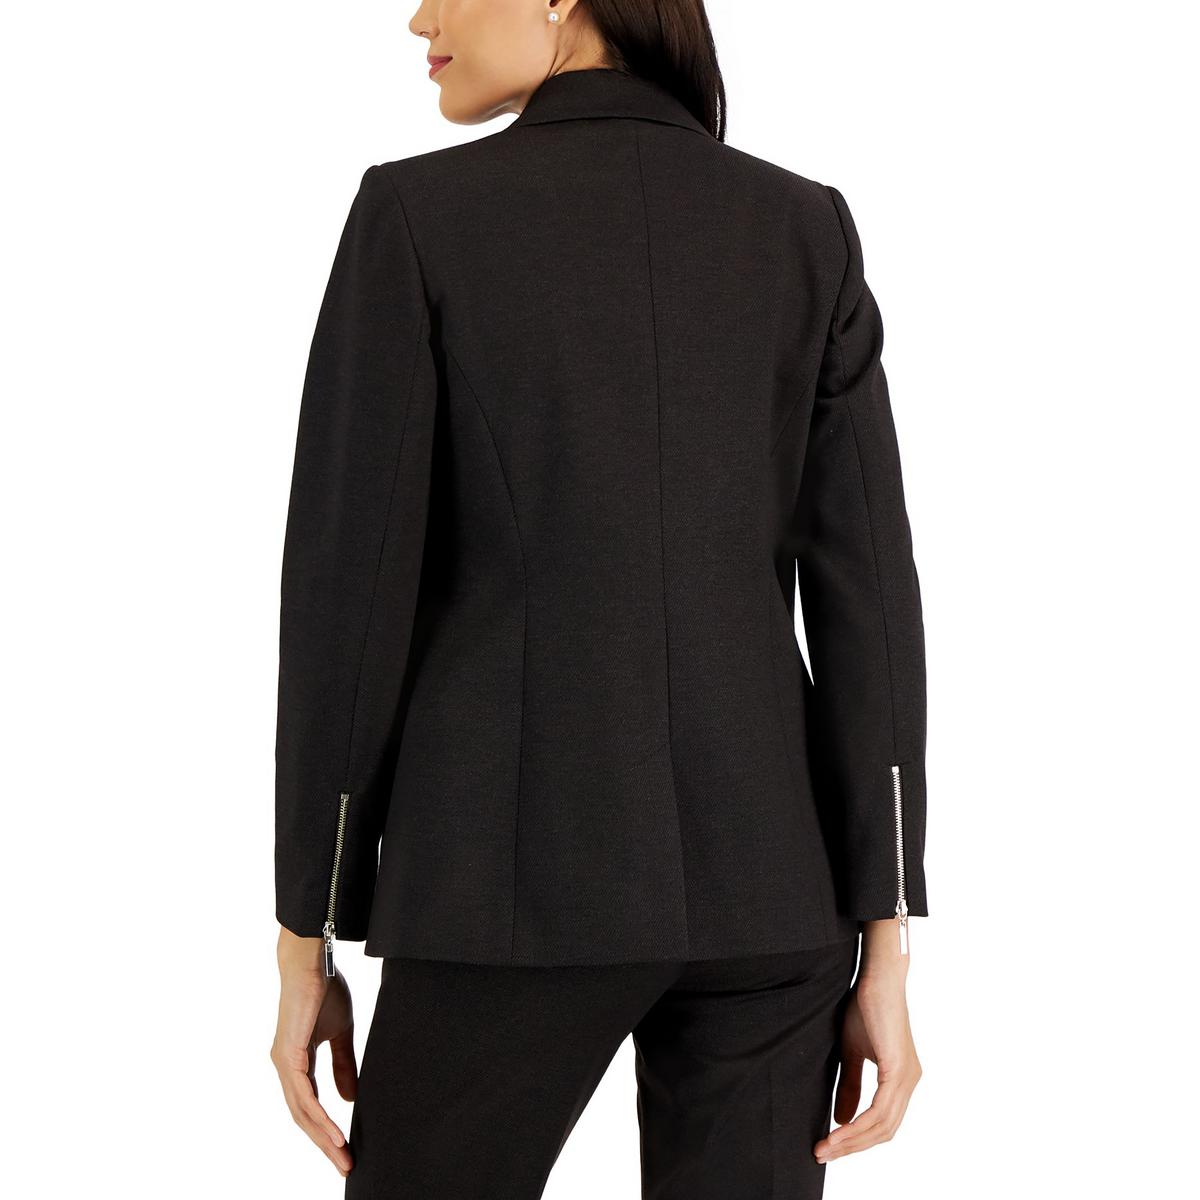 Kasper Womens Notched Collar Suit Separate One-Button Blazer Jacket BHFO  4699 